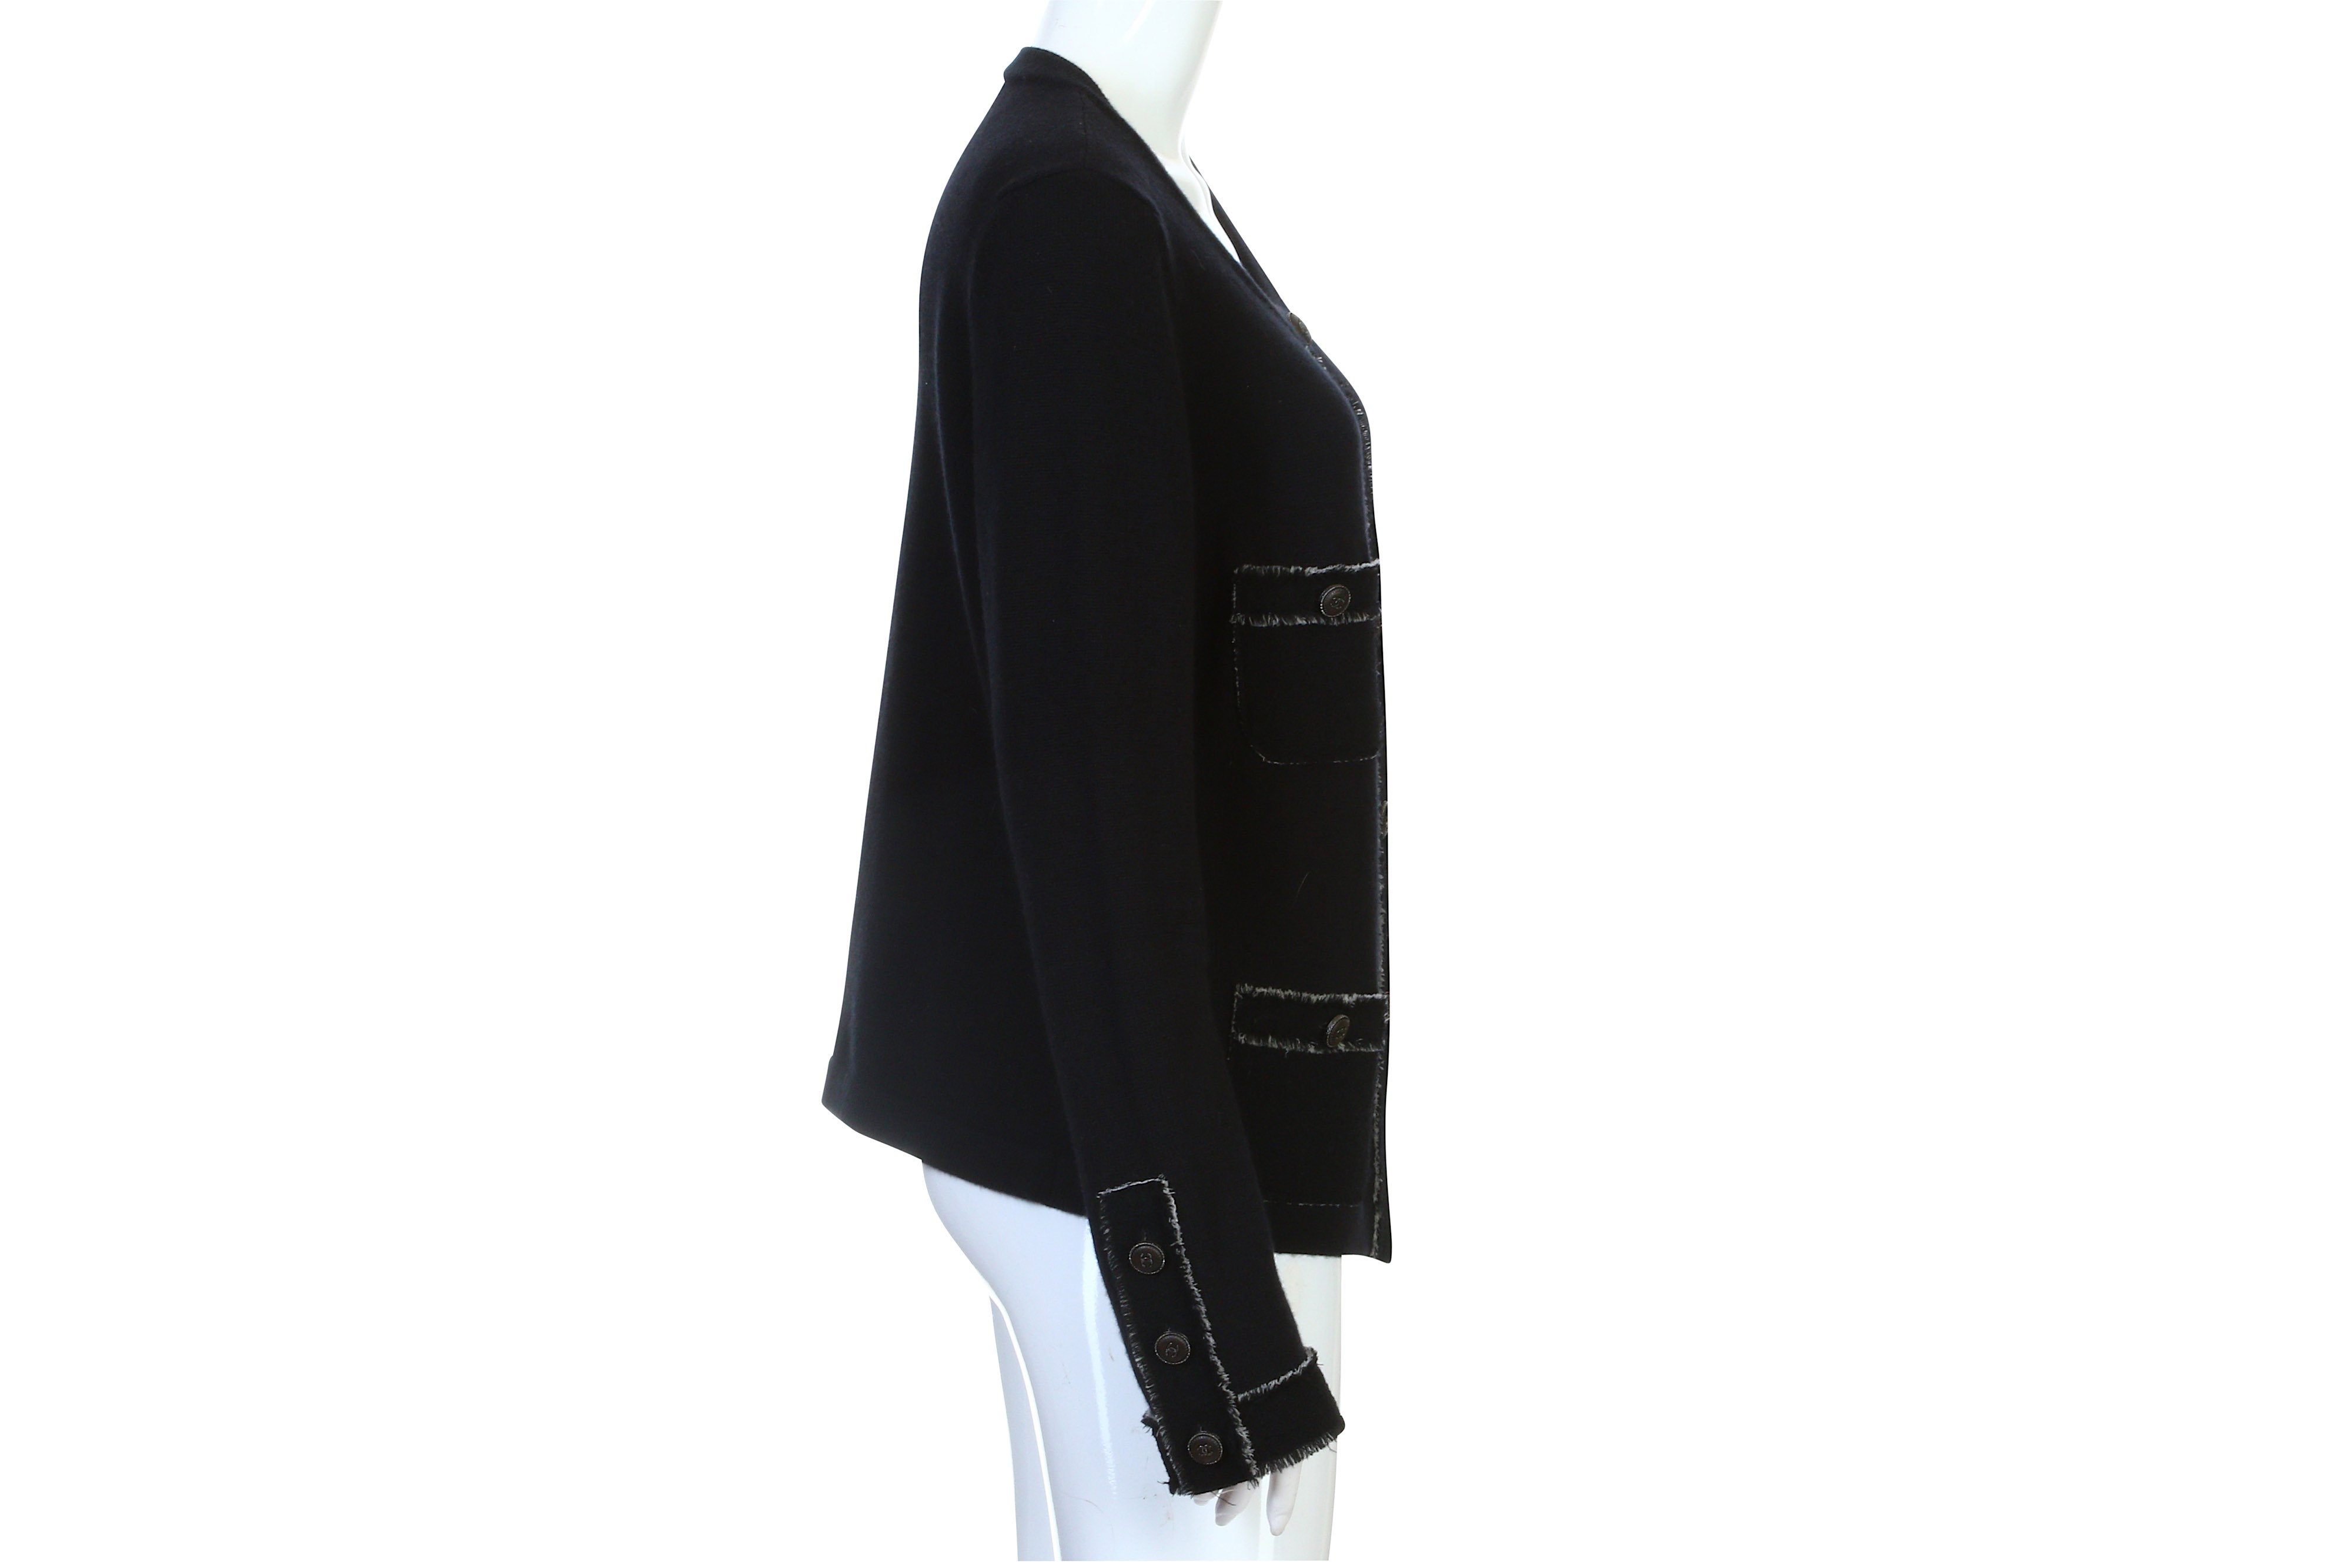 Chanel Black Cashmere Cardigan - Image 2 of 7